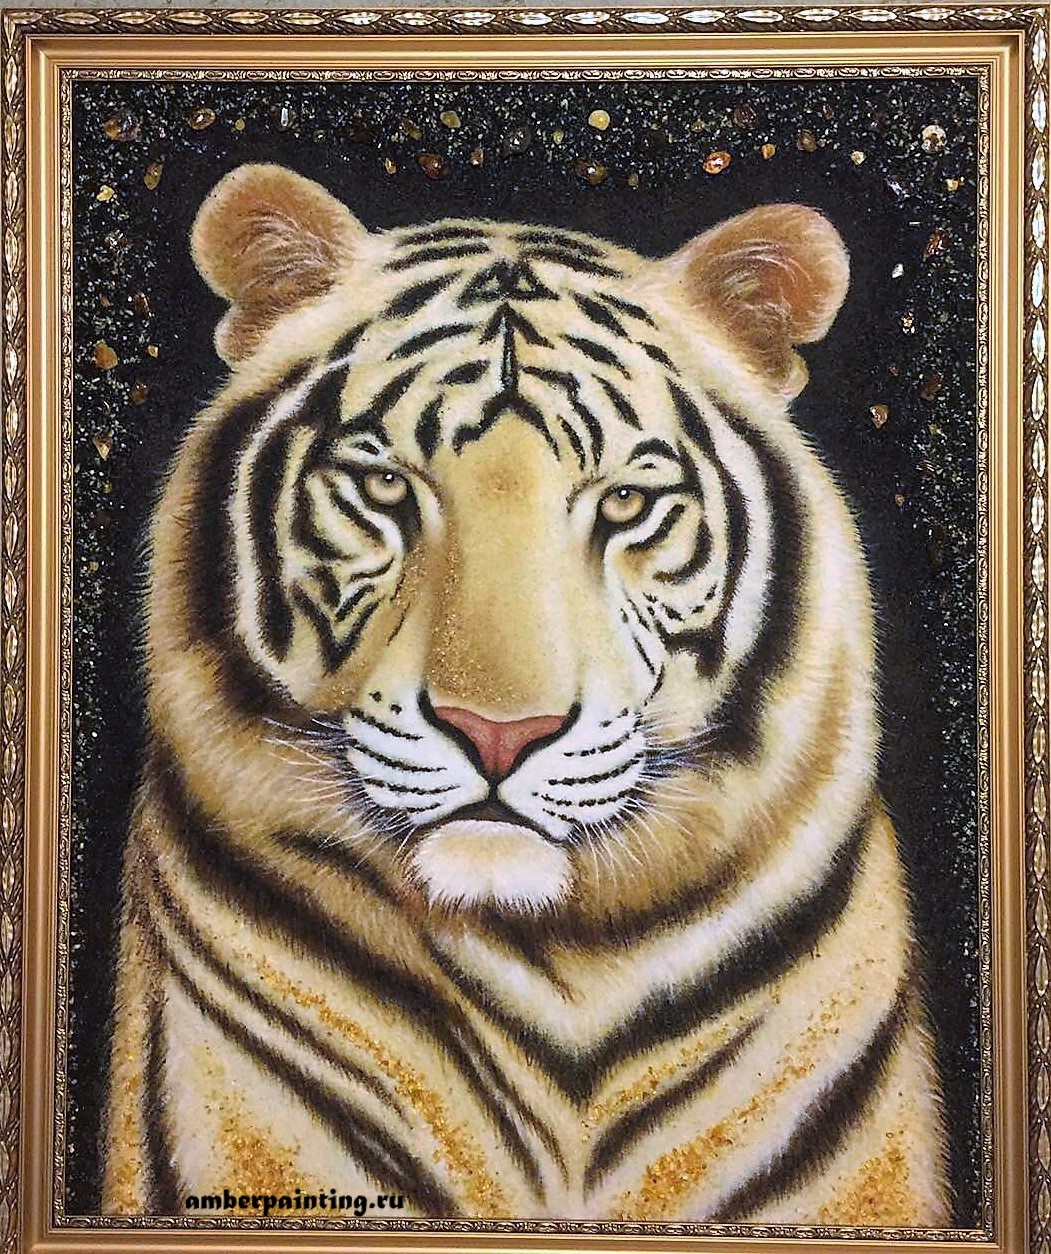 Tiger - , Amber, Painting, Kaliningrad, League of Artists, Art, Artist